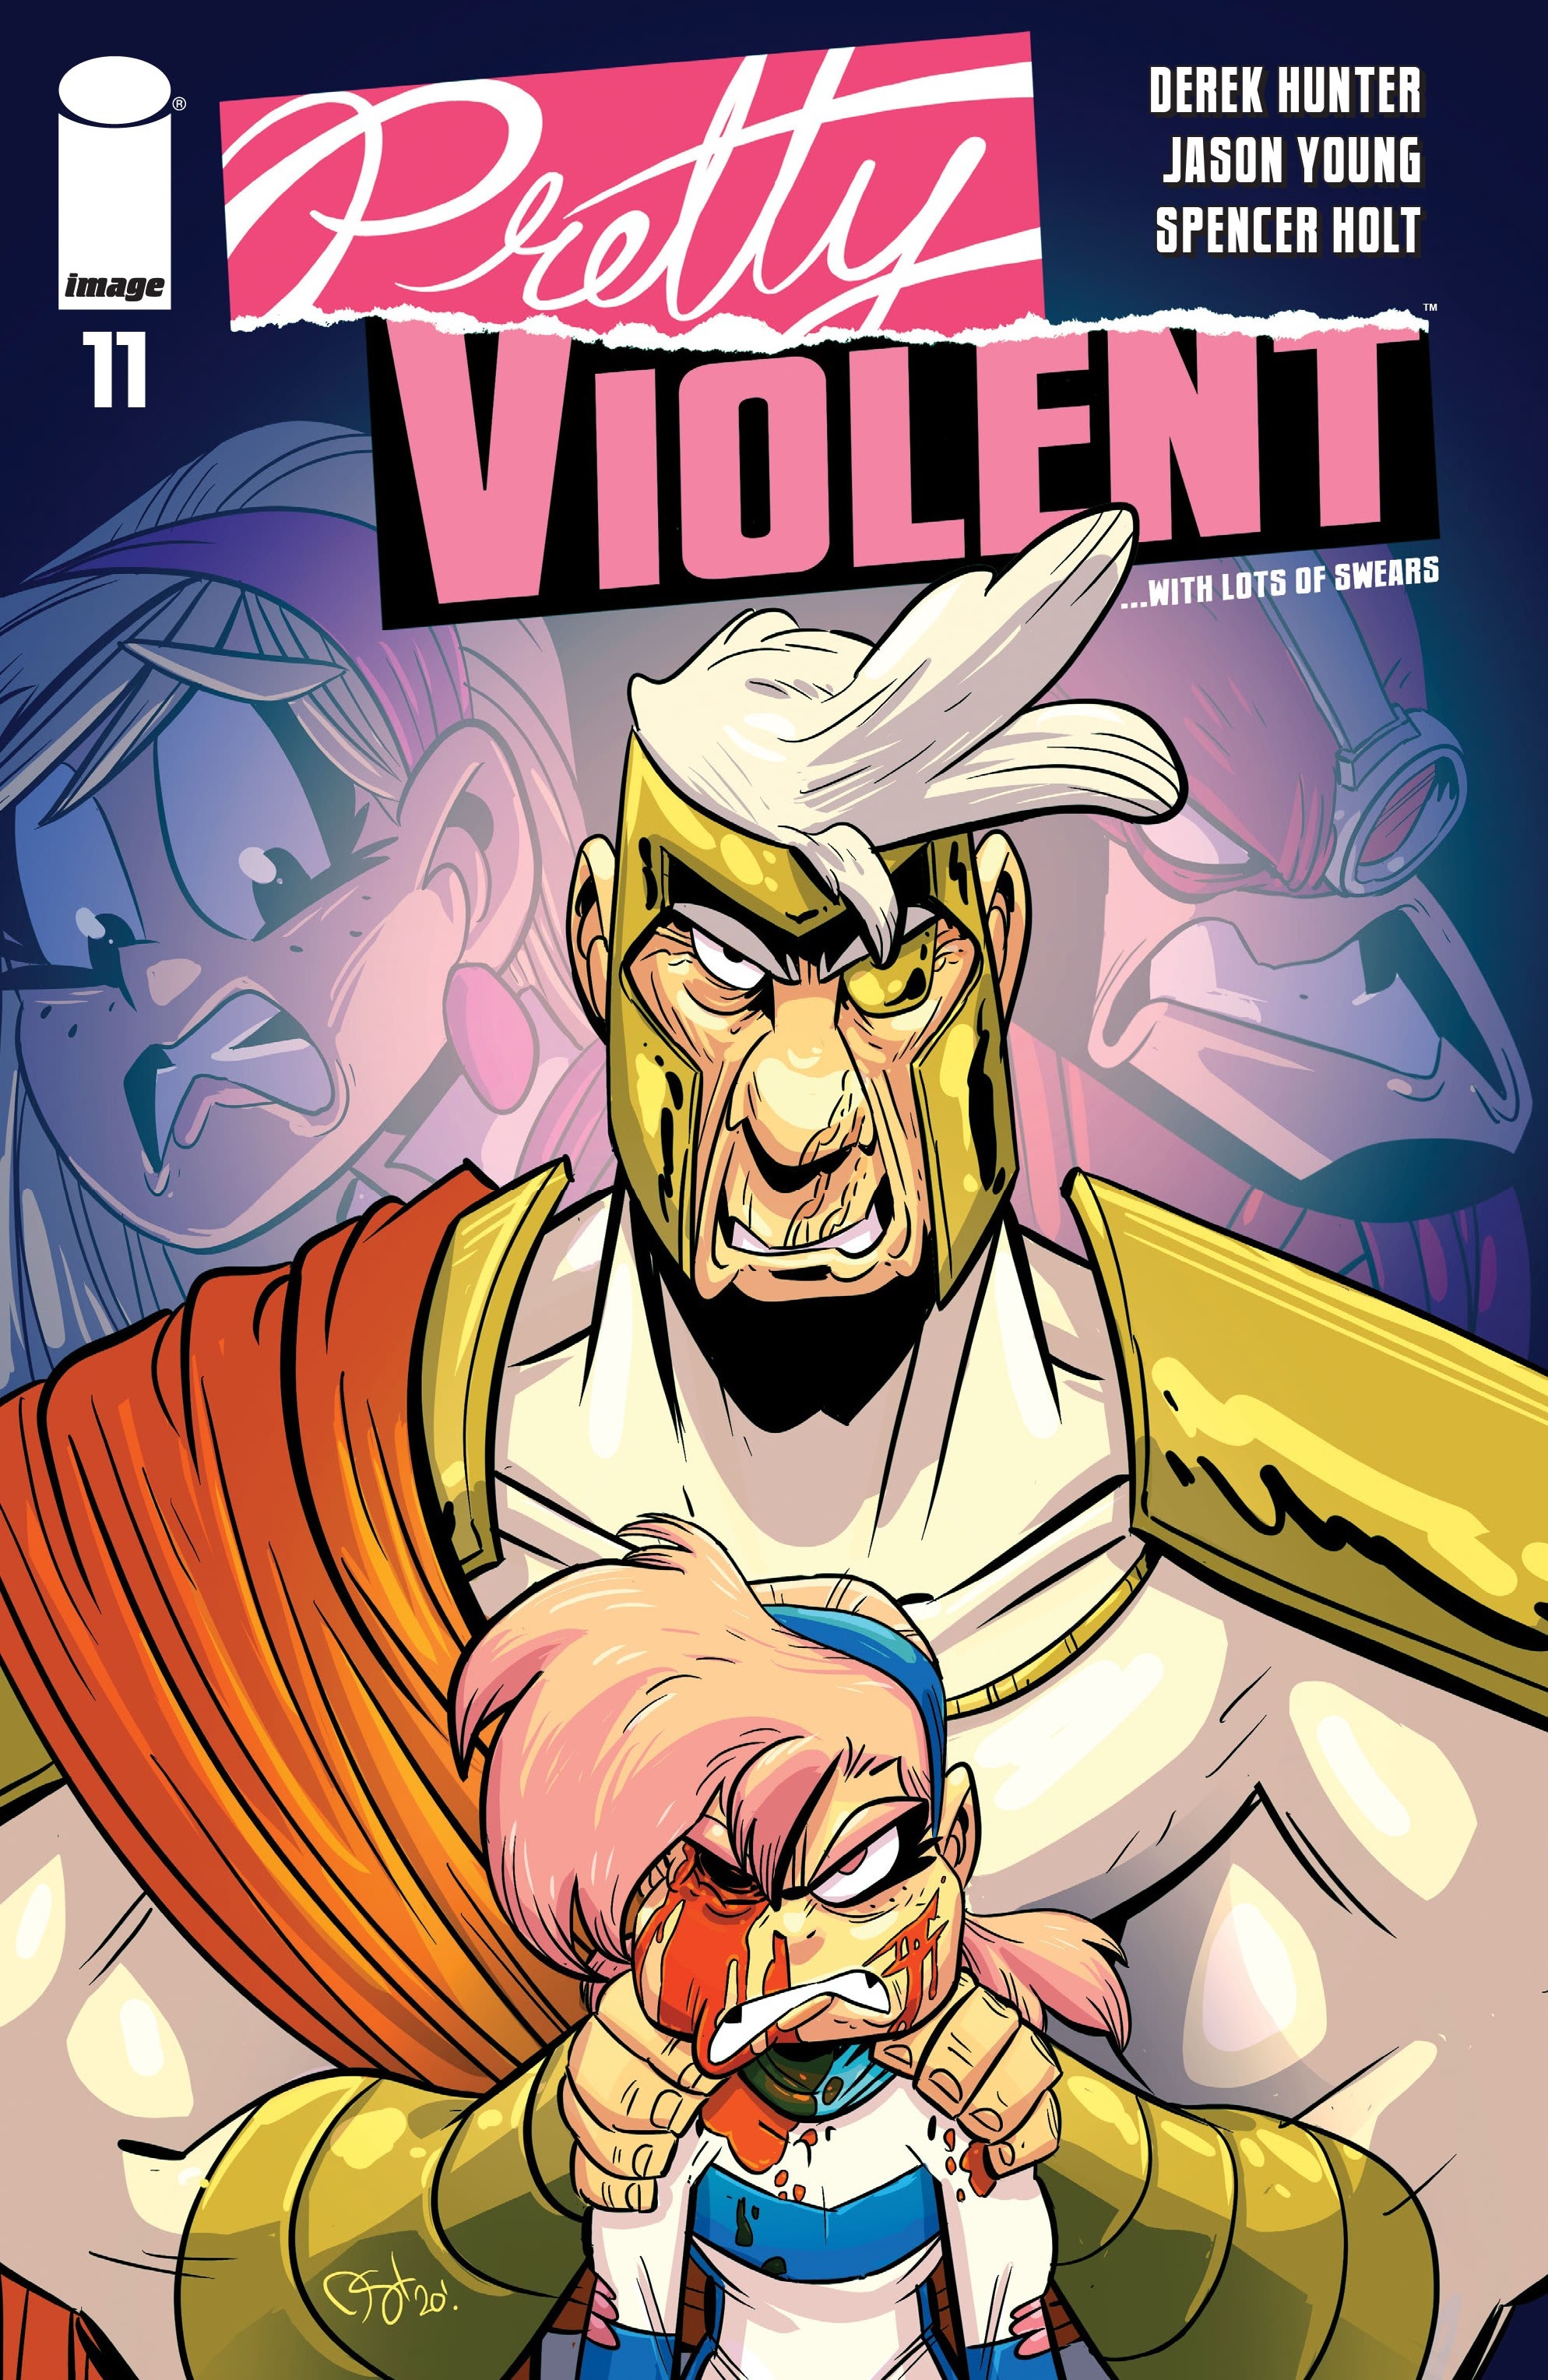 Read online Pretty Violent comic -  Issue #11 - 1